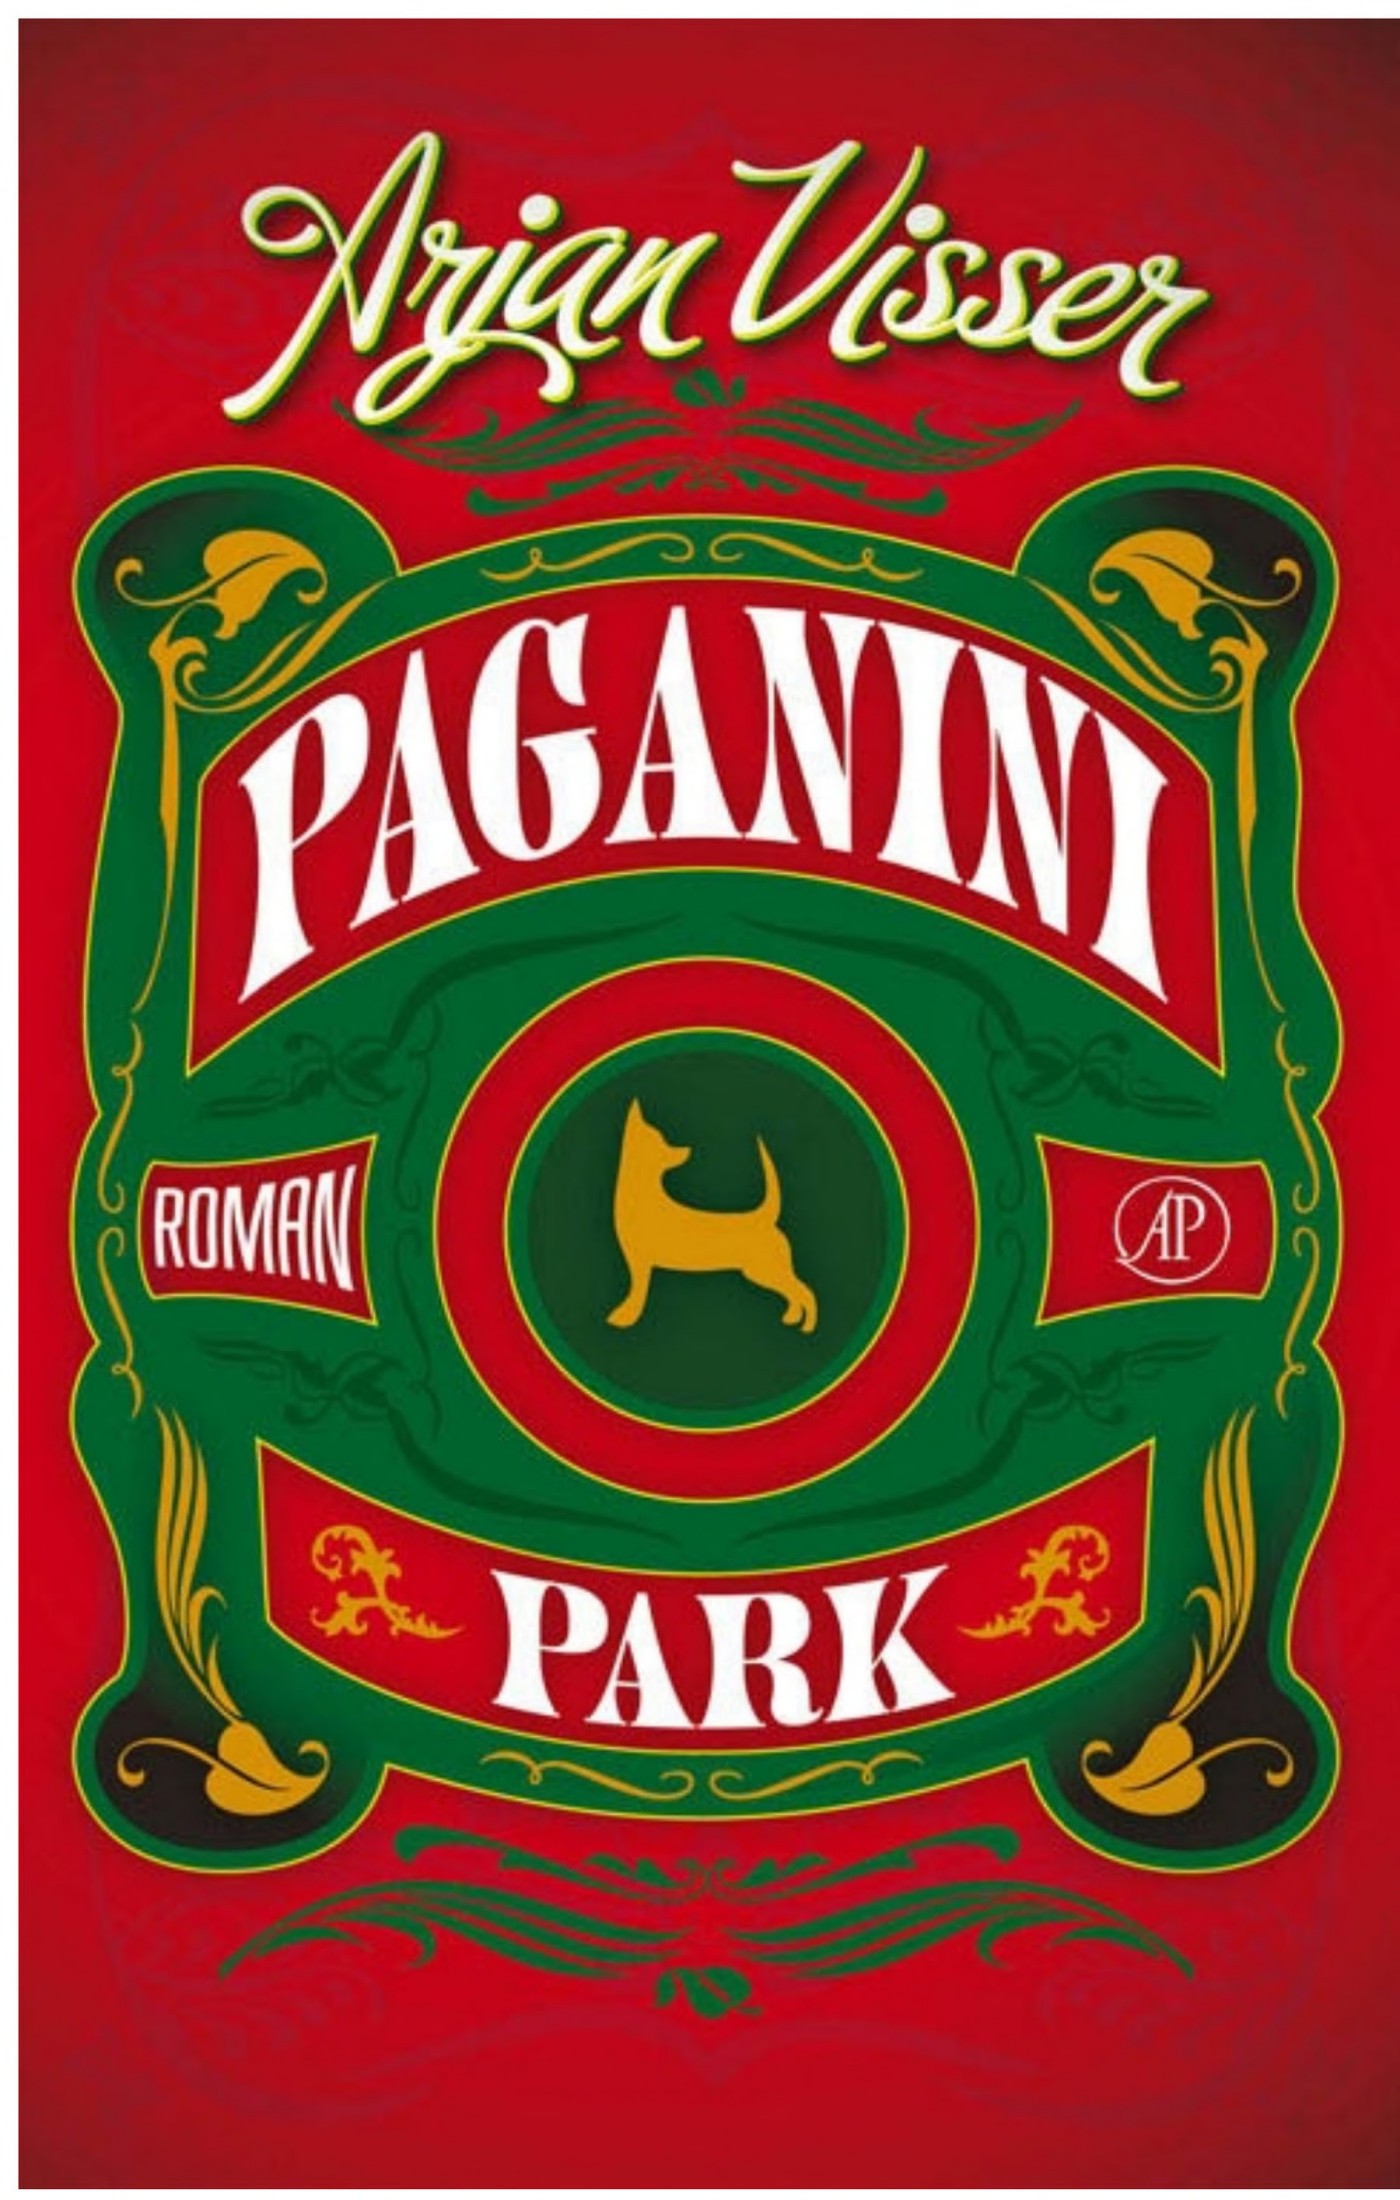 Paganinipark